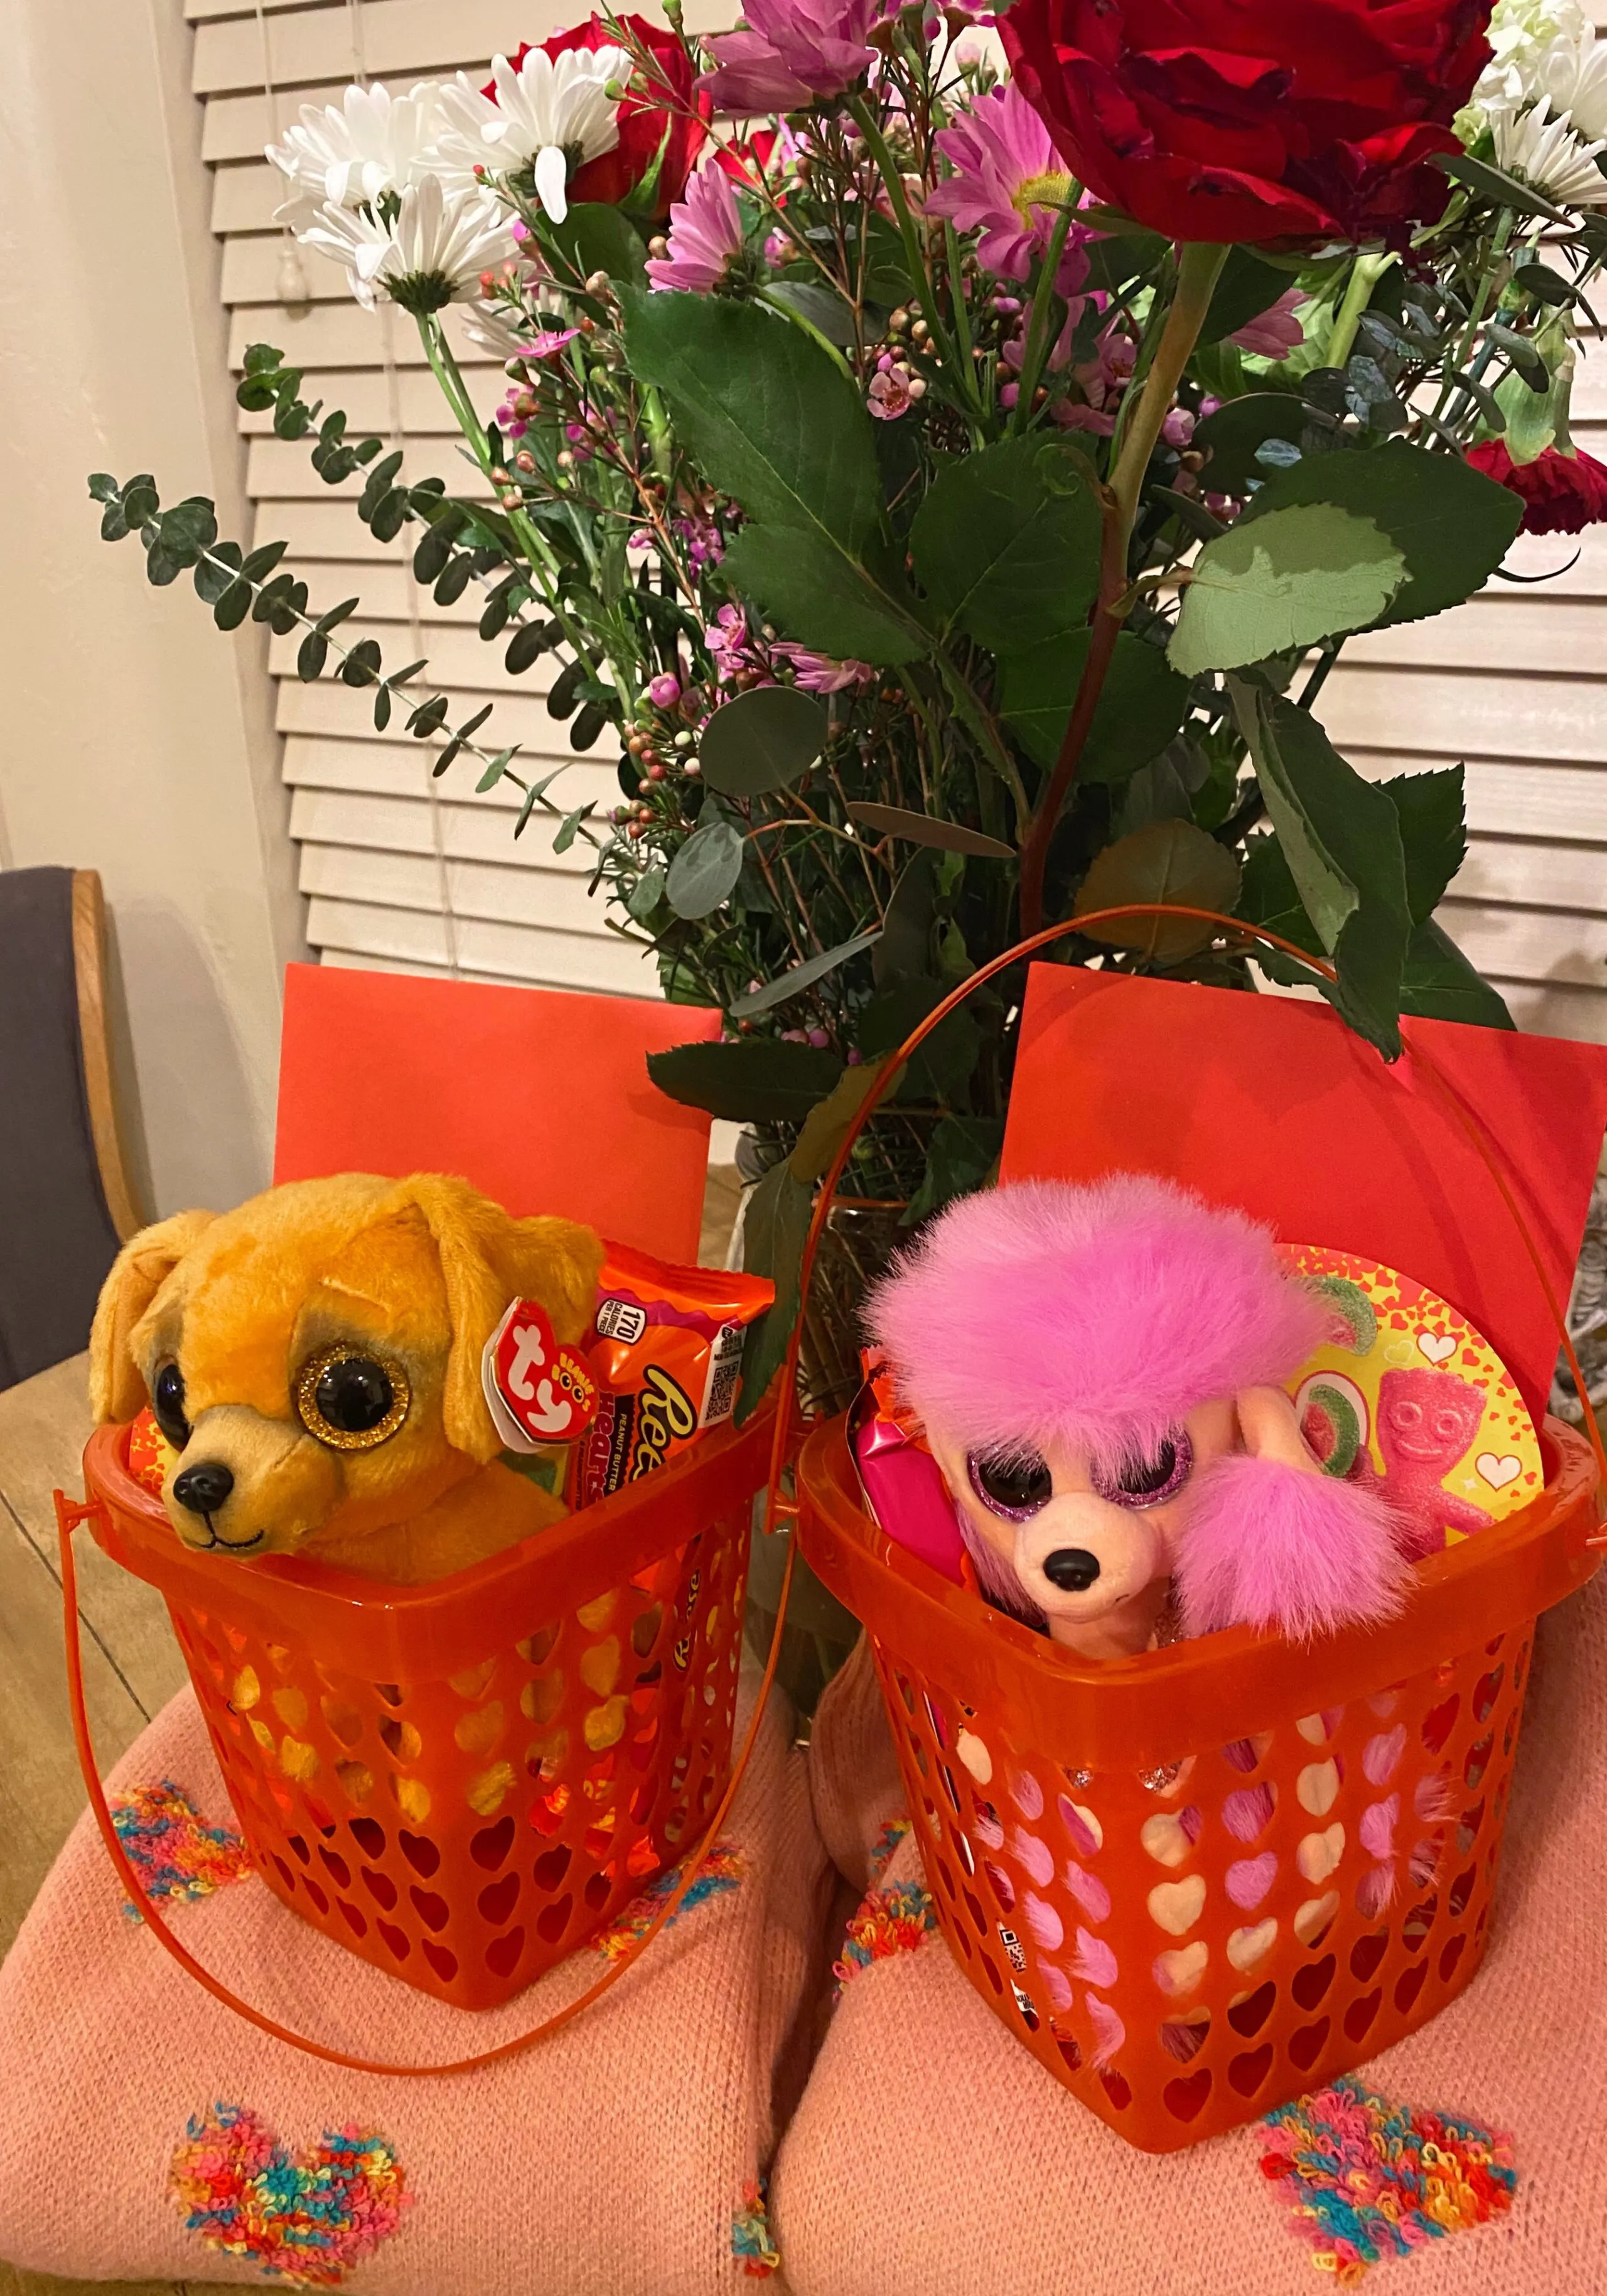 Kids Valentine’s baskets